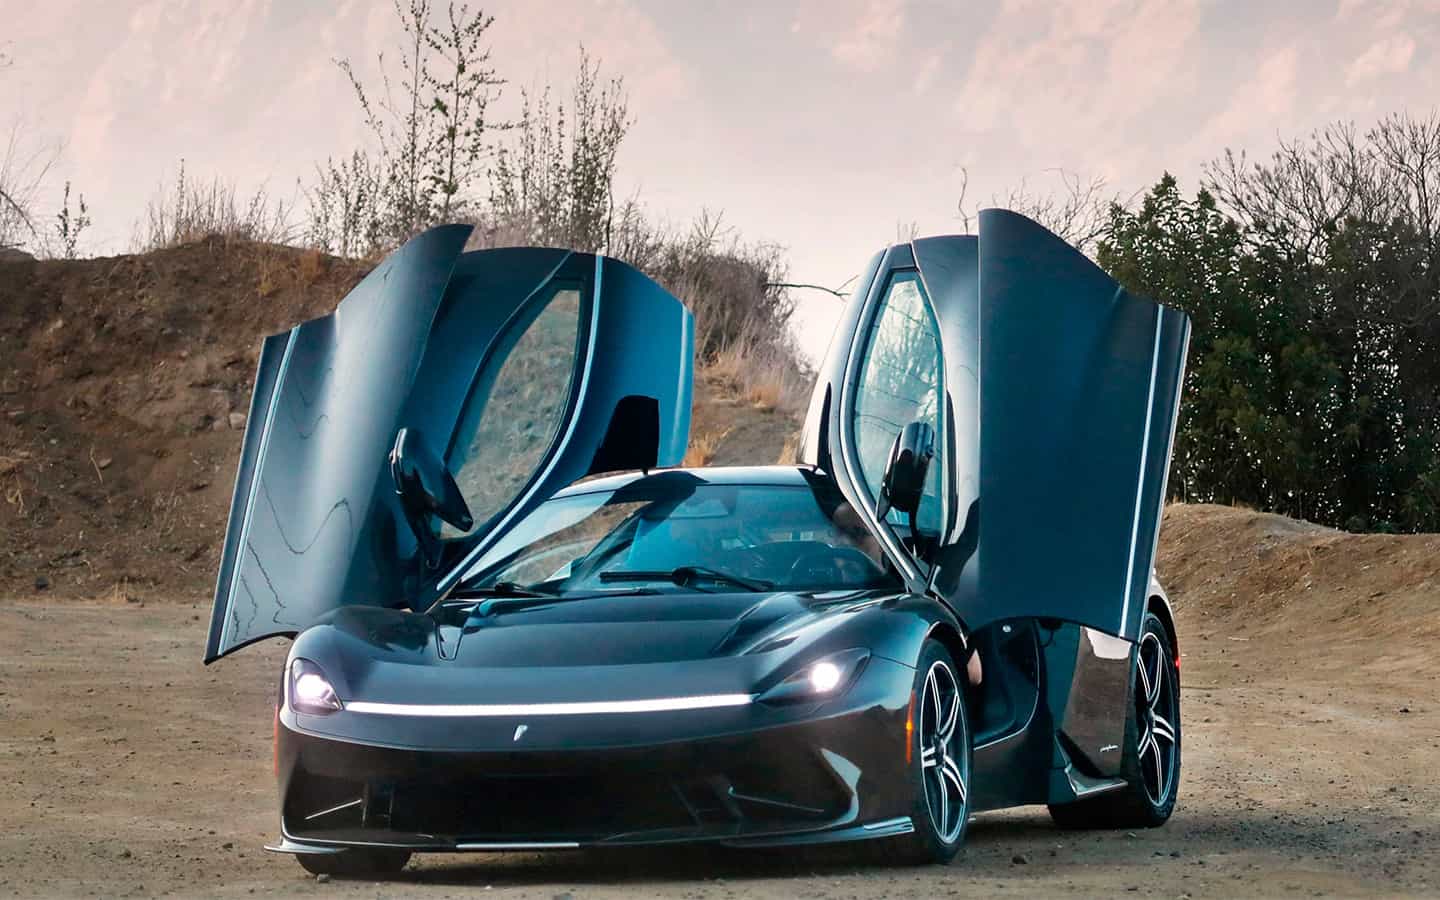 Pinifarina unveils the most powerful Italian car in history